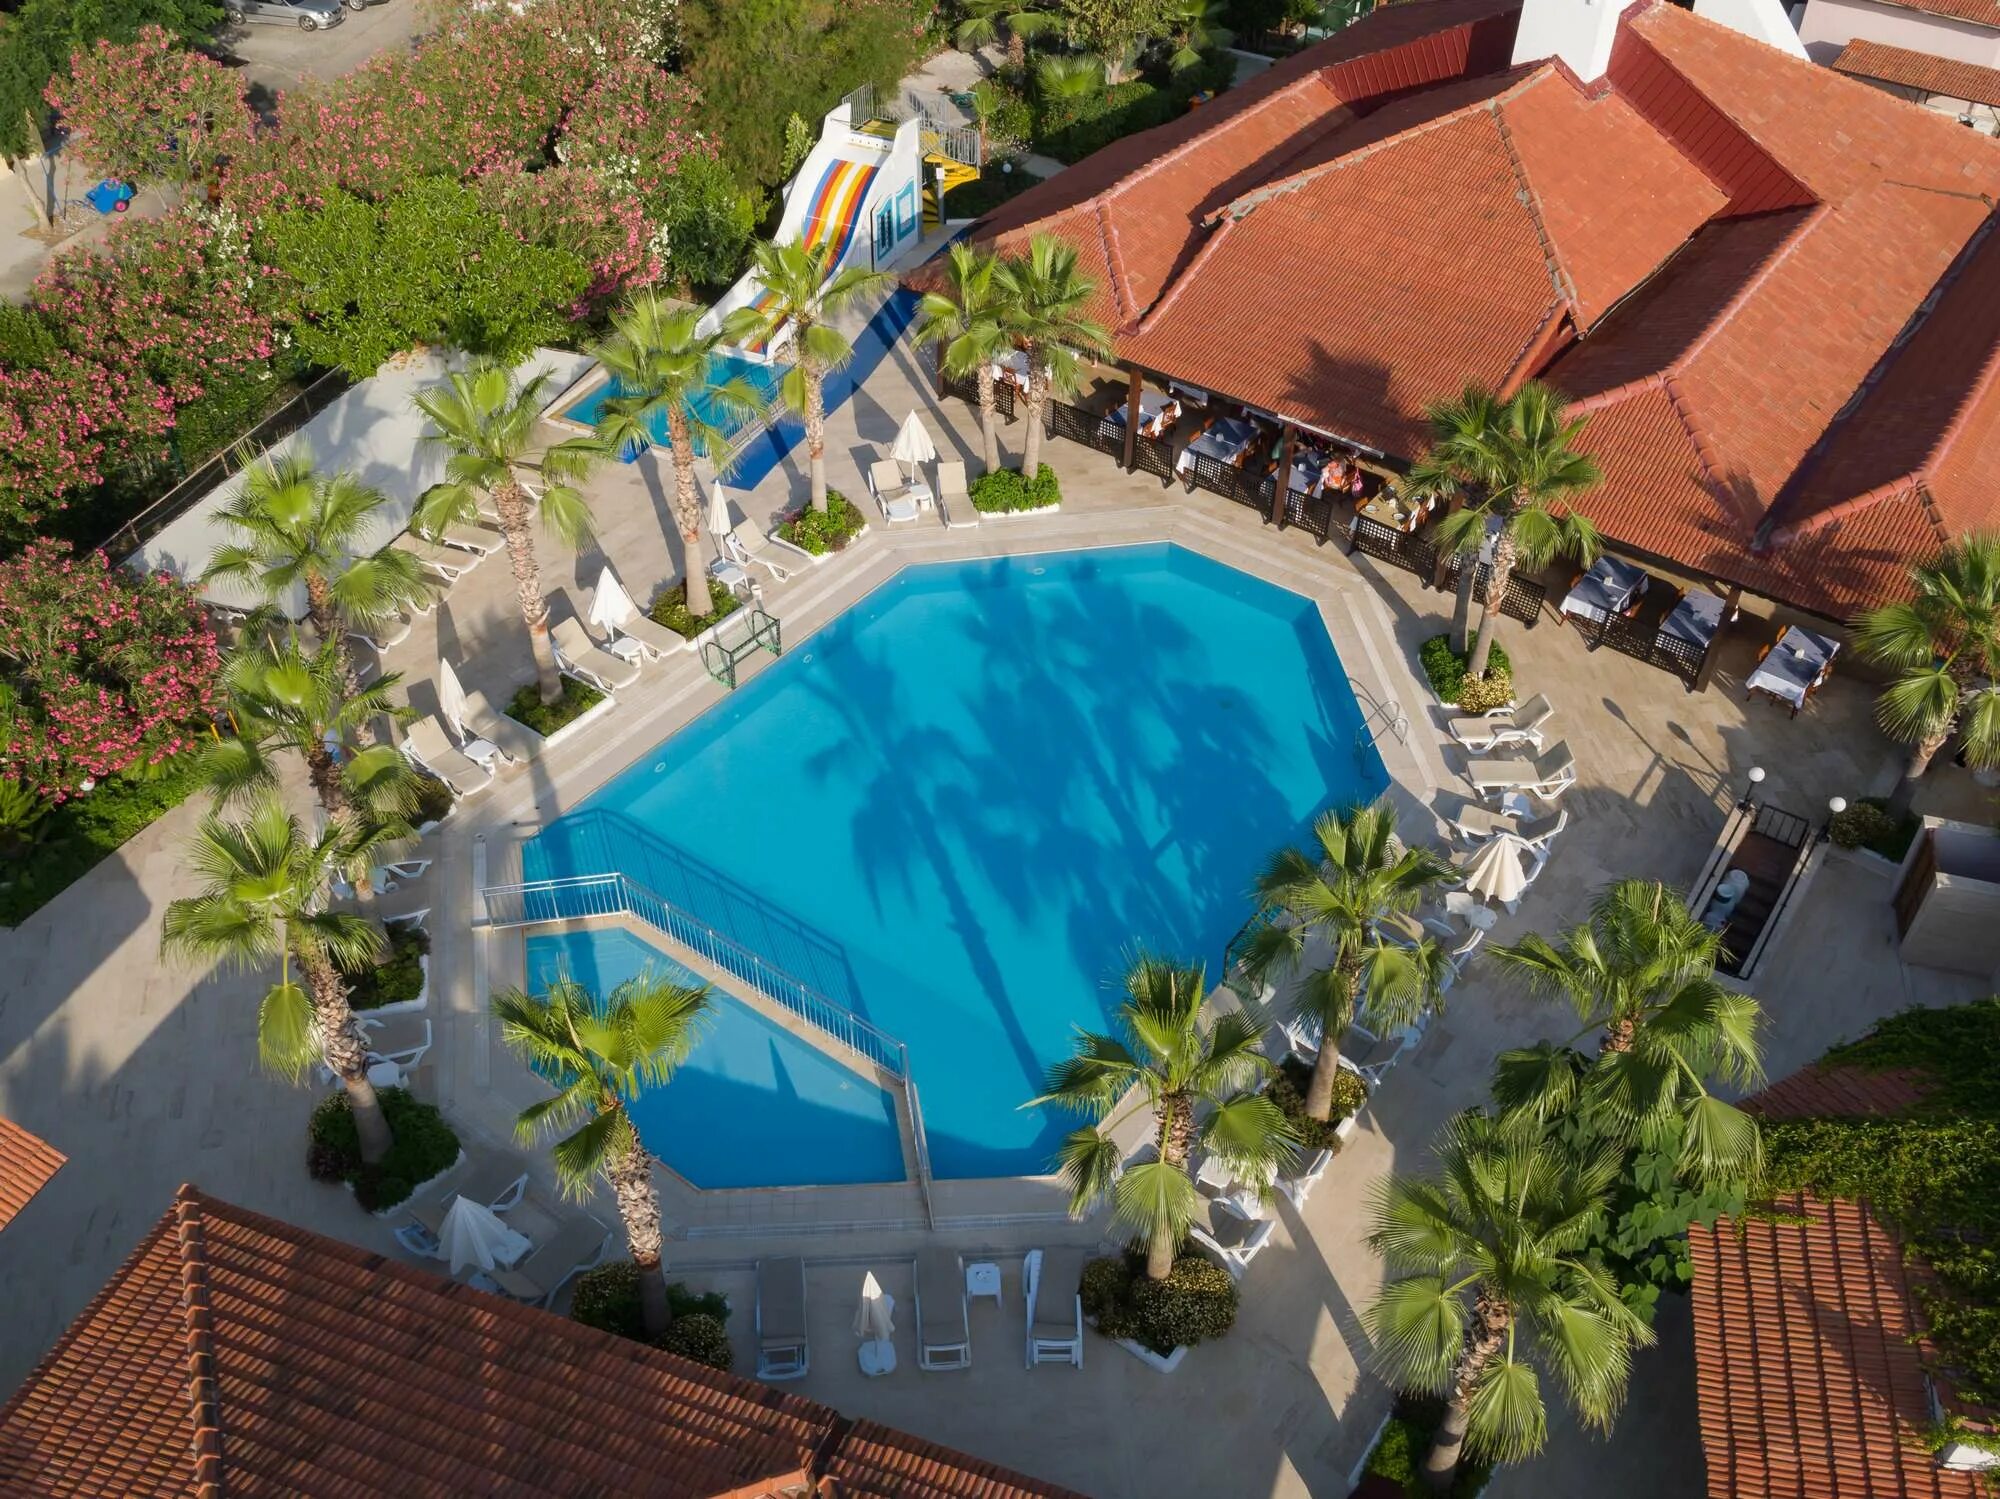 Club Akman Beach Hotel 4 Турция. Otium Park Club Akman 4 Турция. Отиум Акман парк Чамьюва отель 4 Кемер. Otium Park Club Akman Кемер / Чамьюва,.